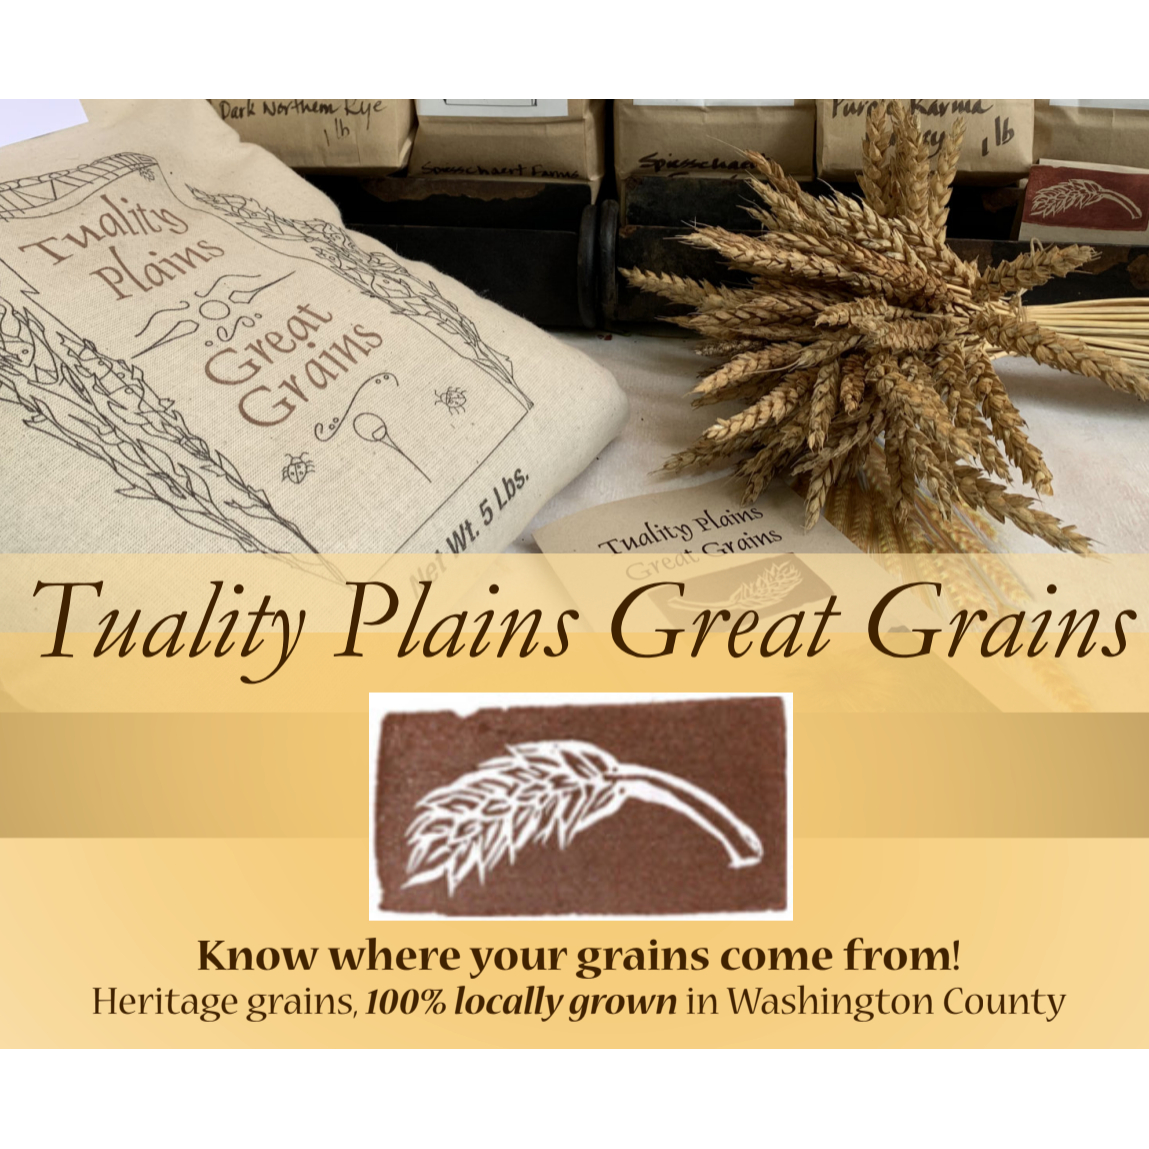 Tuality Plains Great Grains